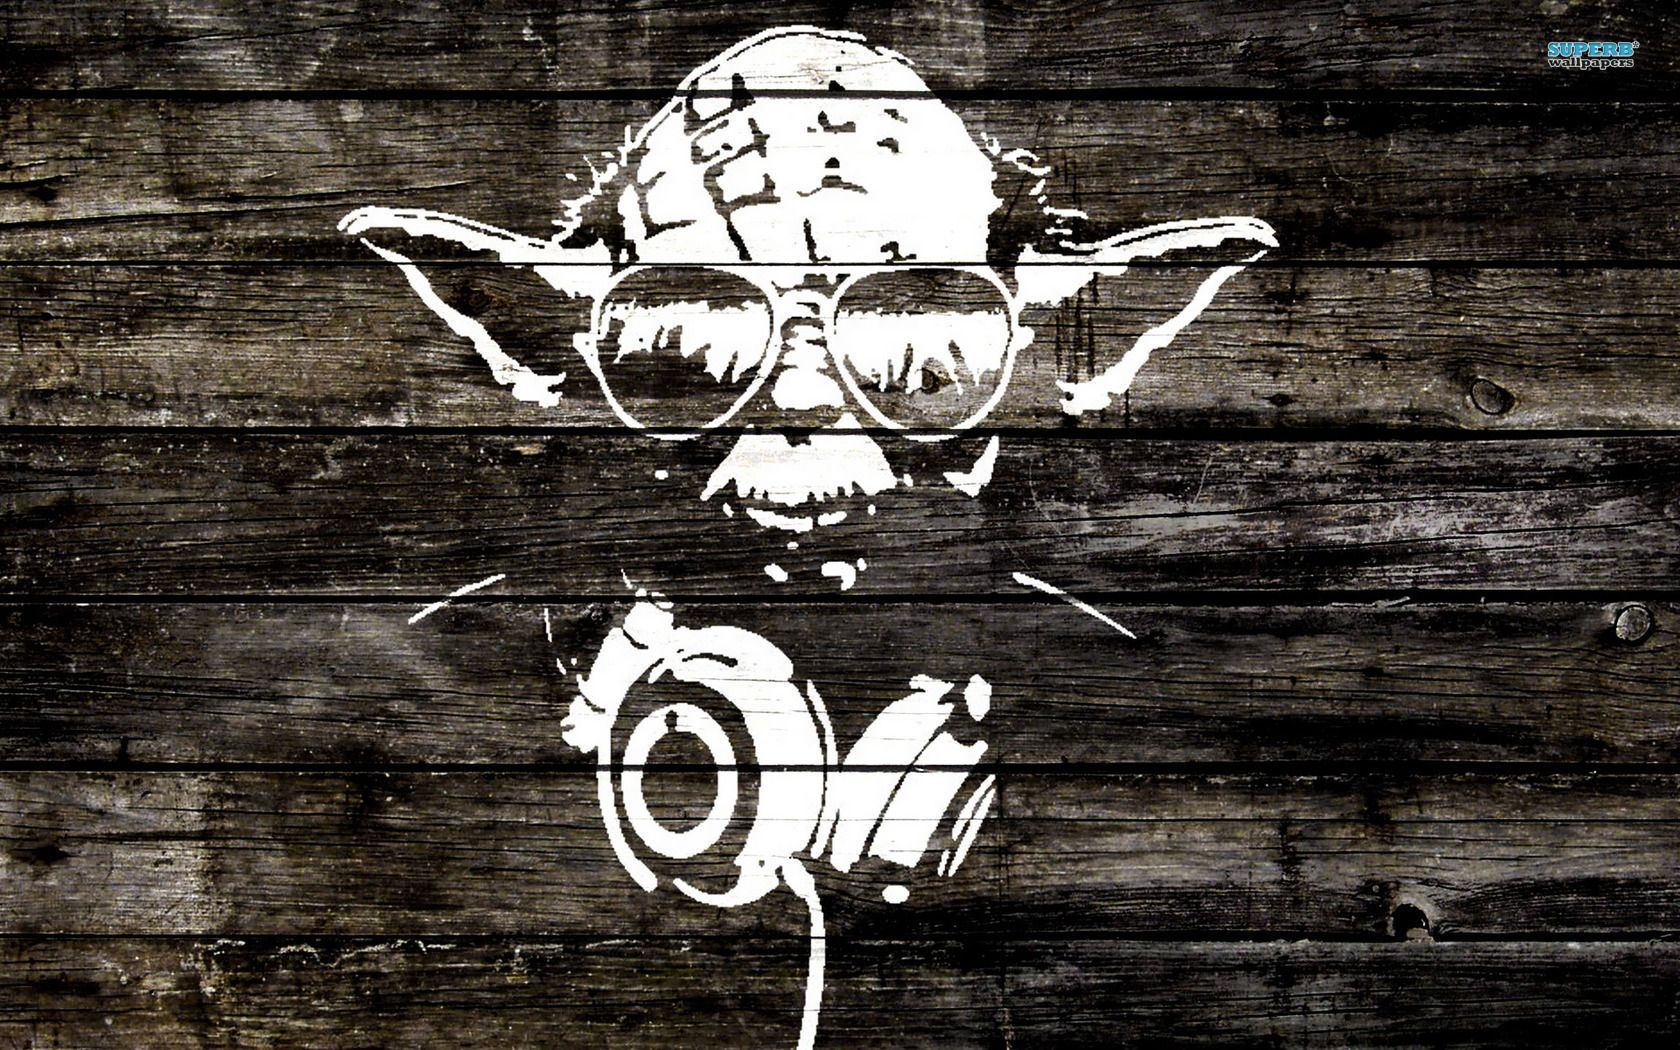 Yoda wood graffiti wallpaper - Movie wallpapers - #14346